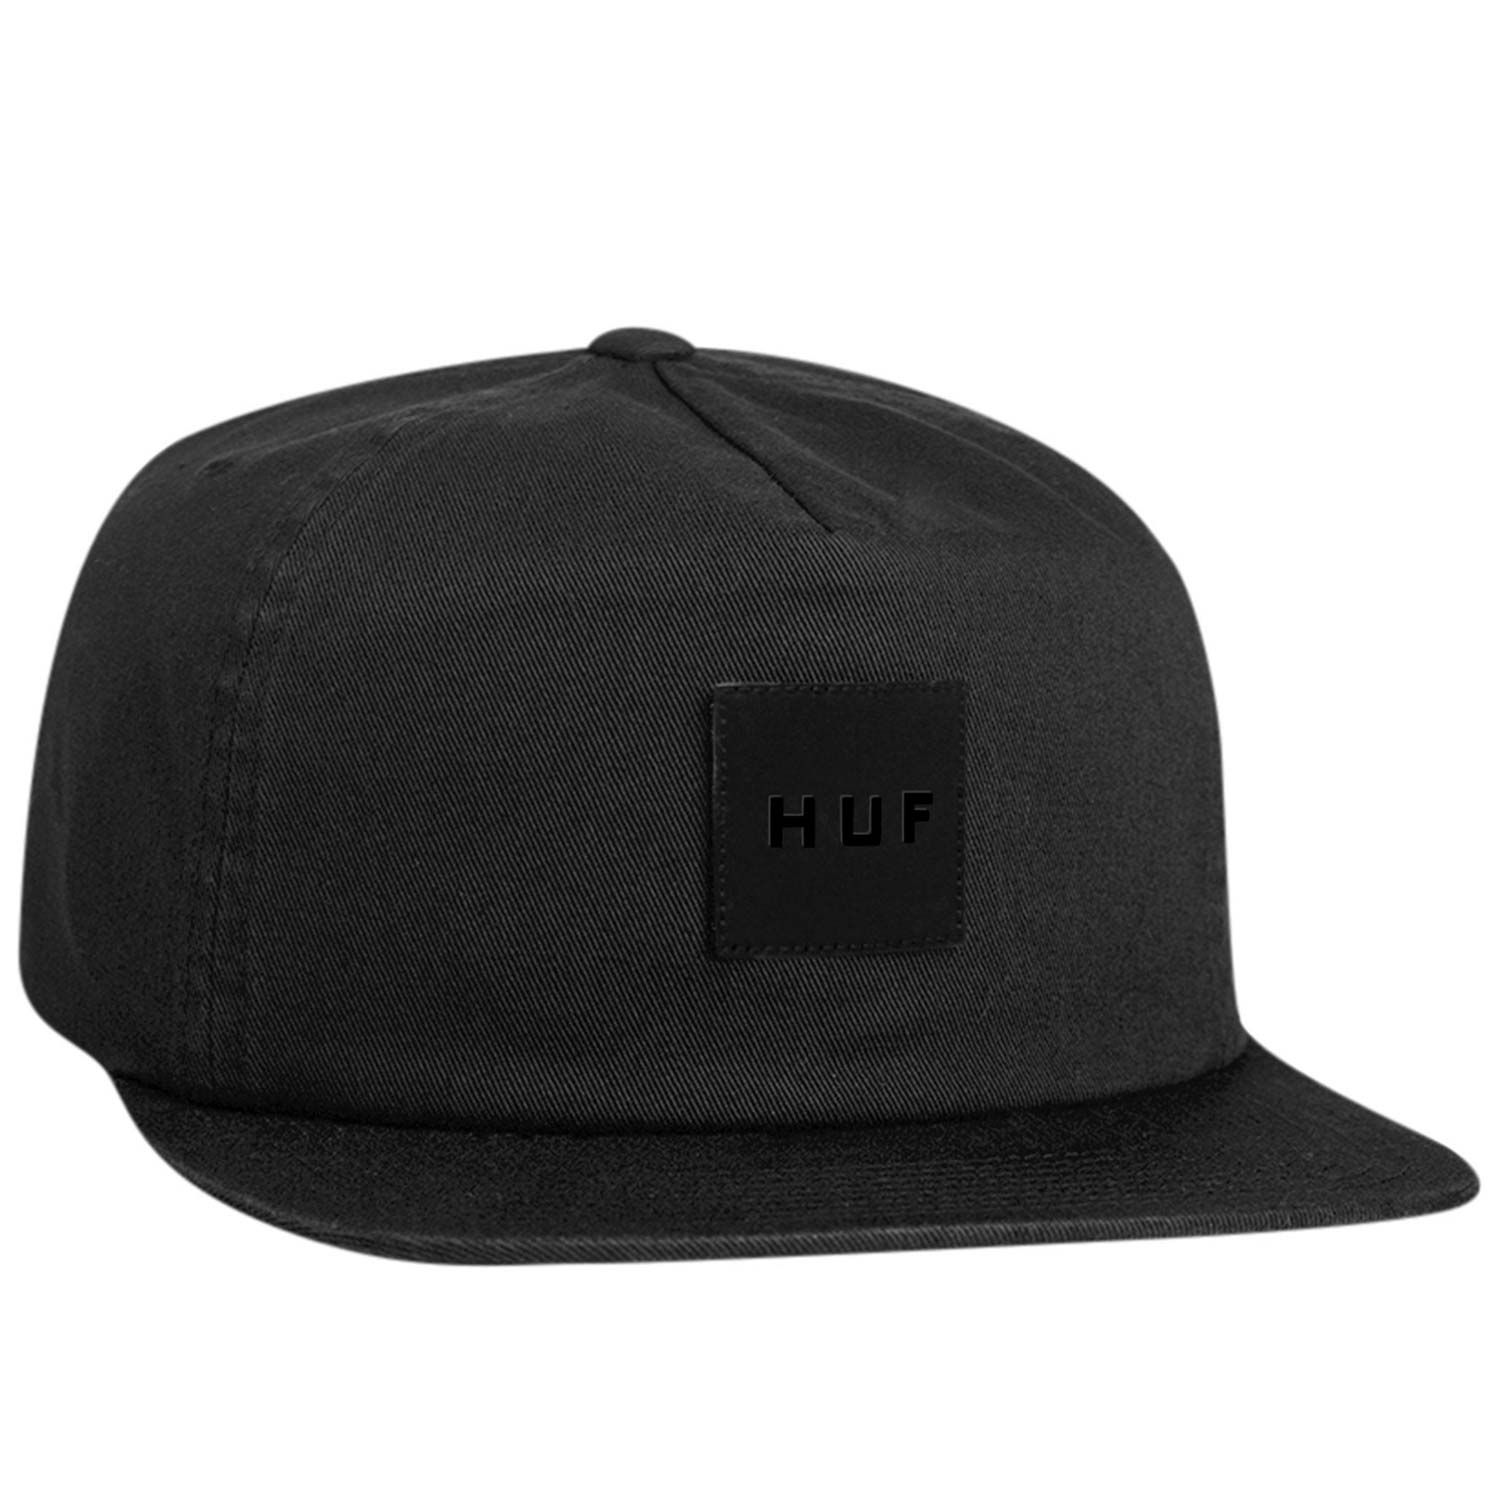 Huf Essentials Unstructured Box Logo Snapback Cap - Black - Strapback Cap by Huf One Size